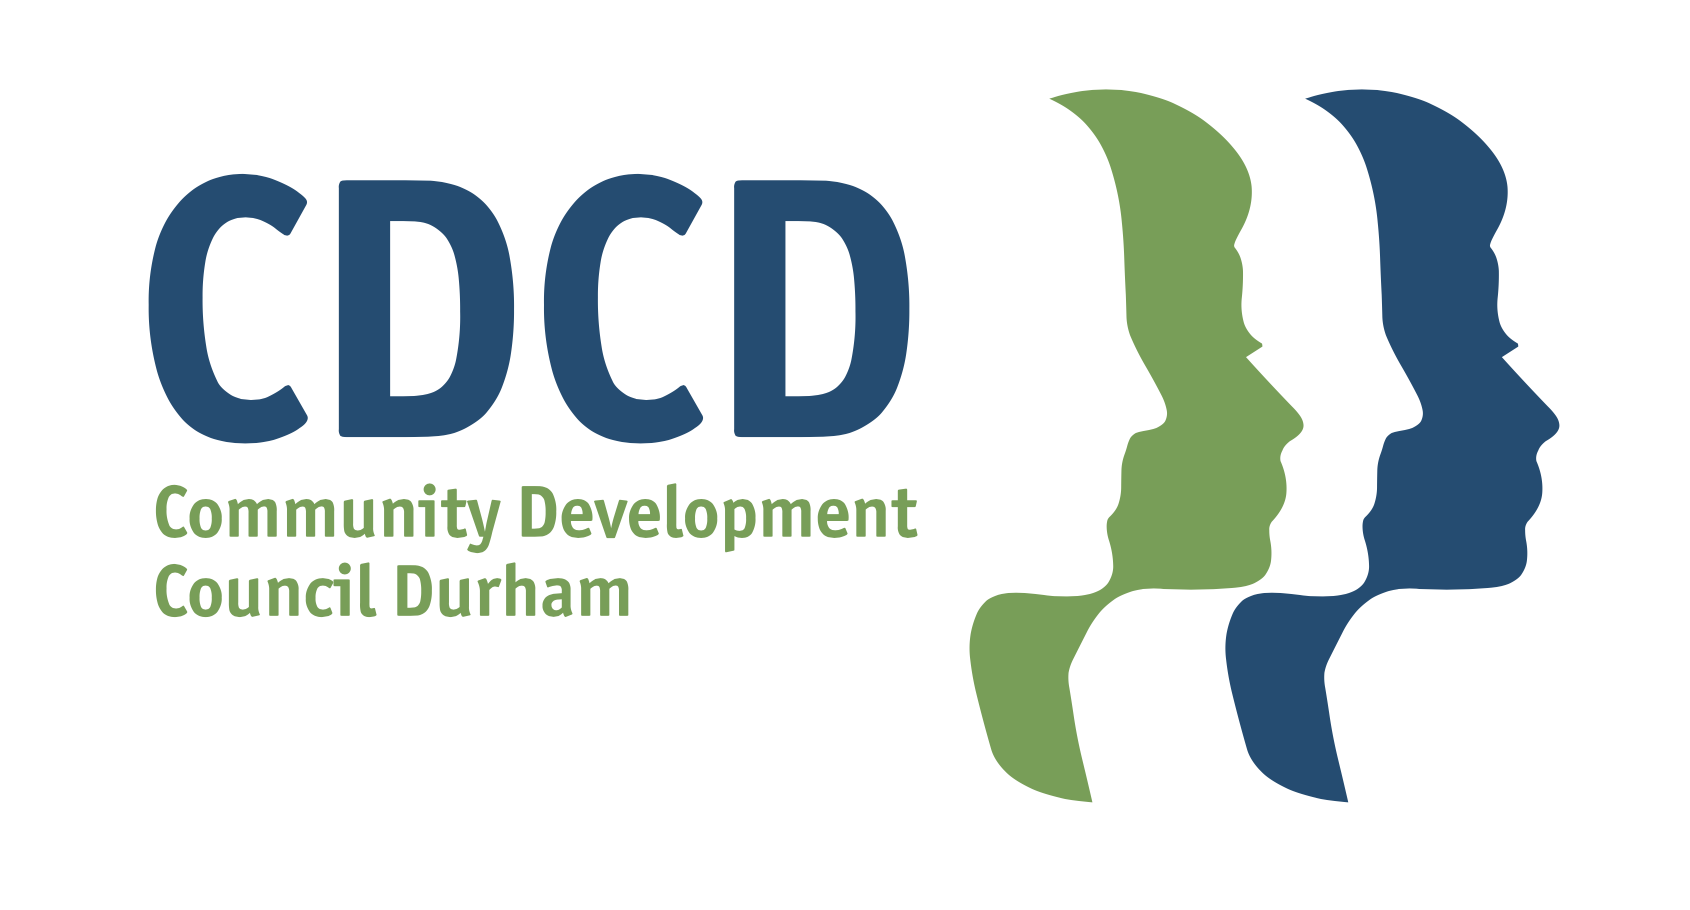 CDCD Logo